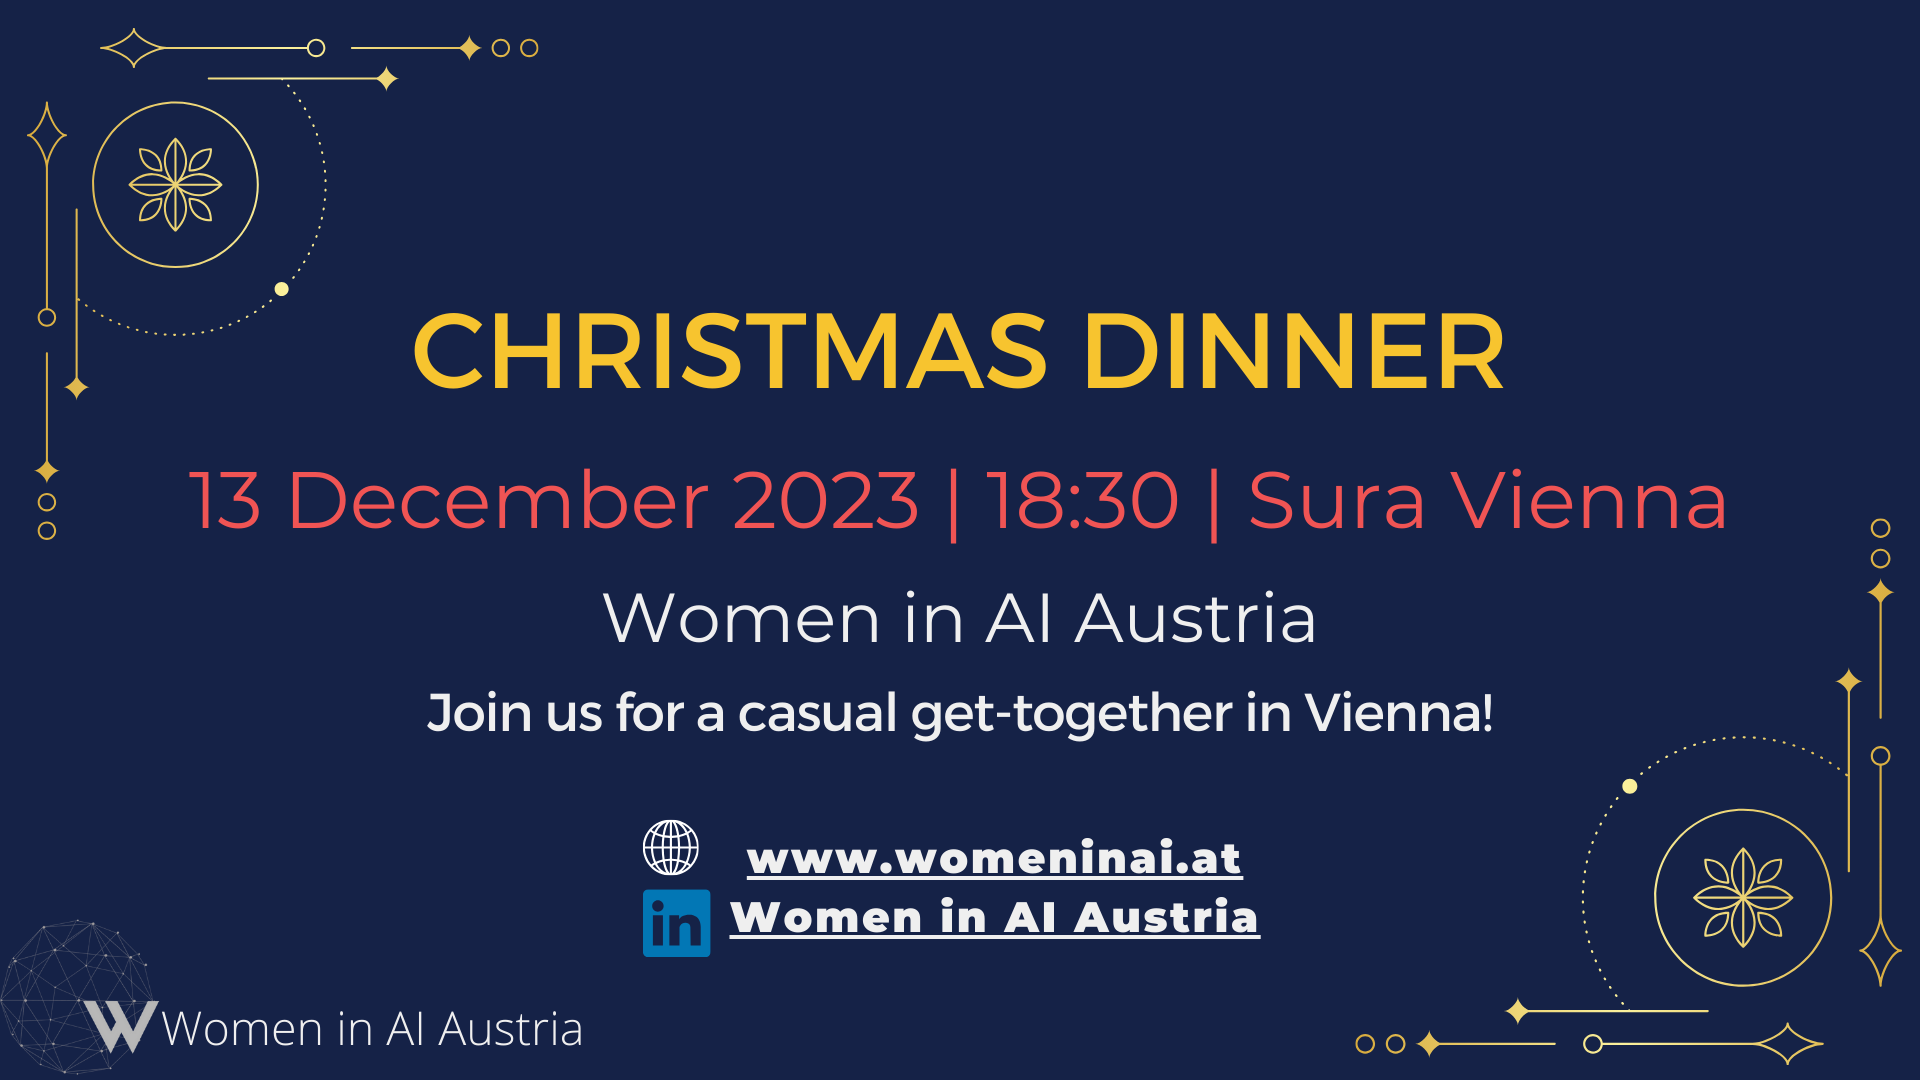 Women in AI Austria Christmas dinner on 13 December (18:30) at Sura Restaurant in Vienna